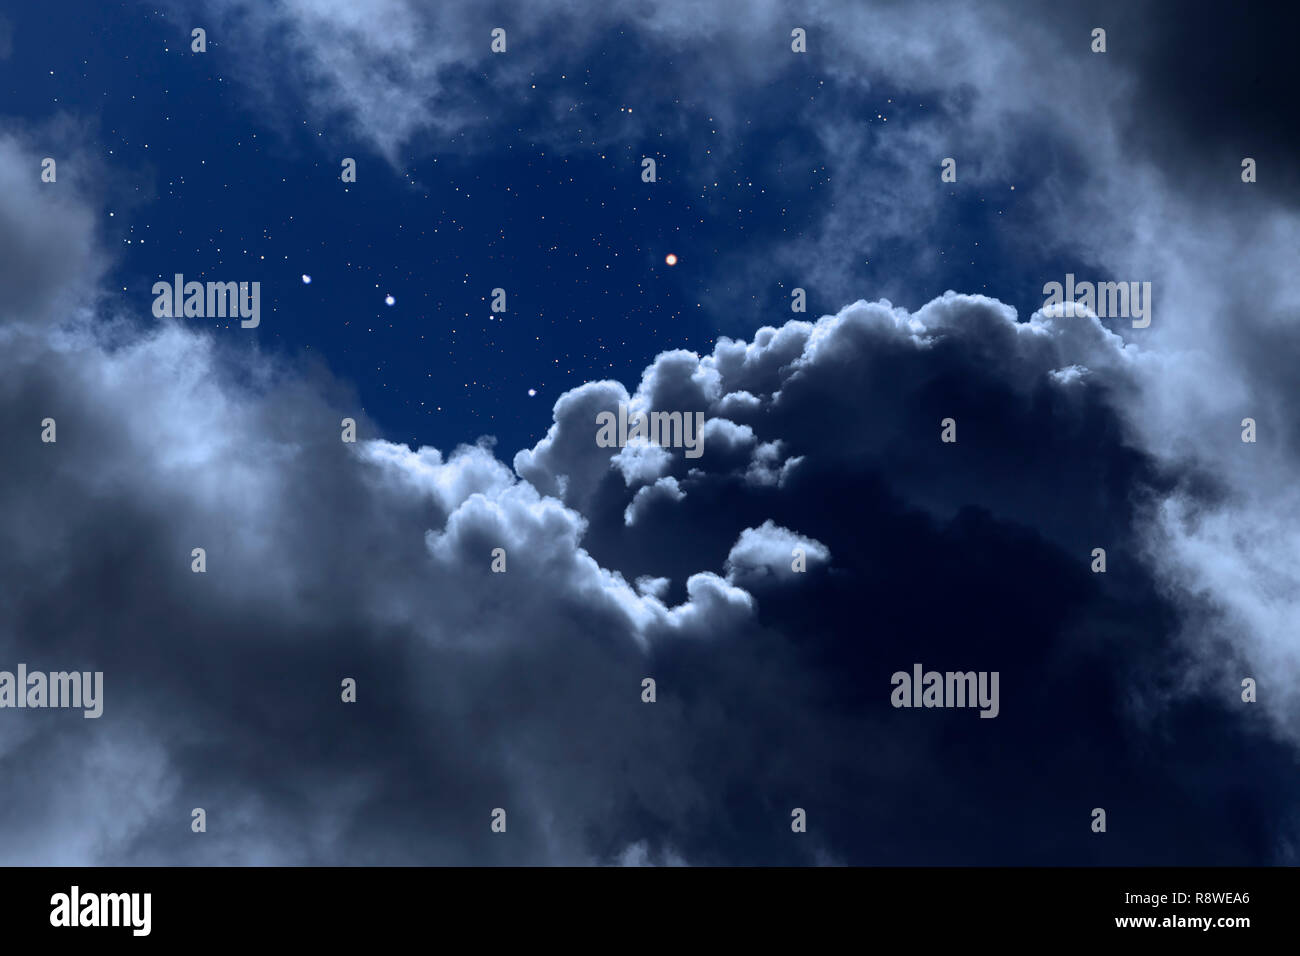 Cloudy night sky with stars Stock Photo - Alamy